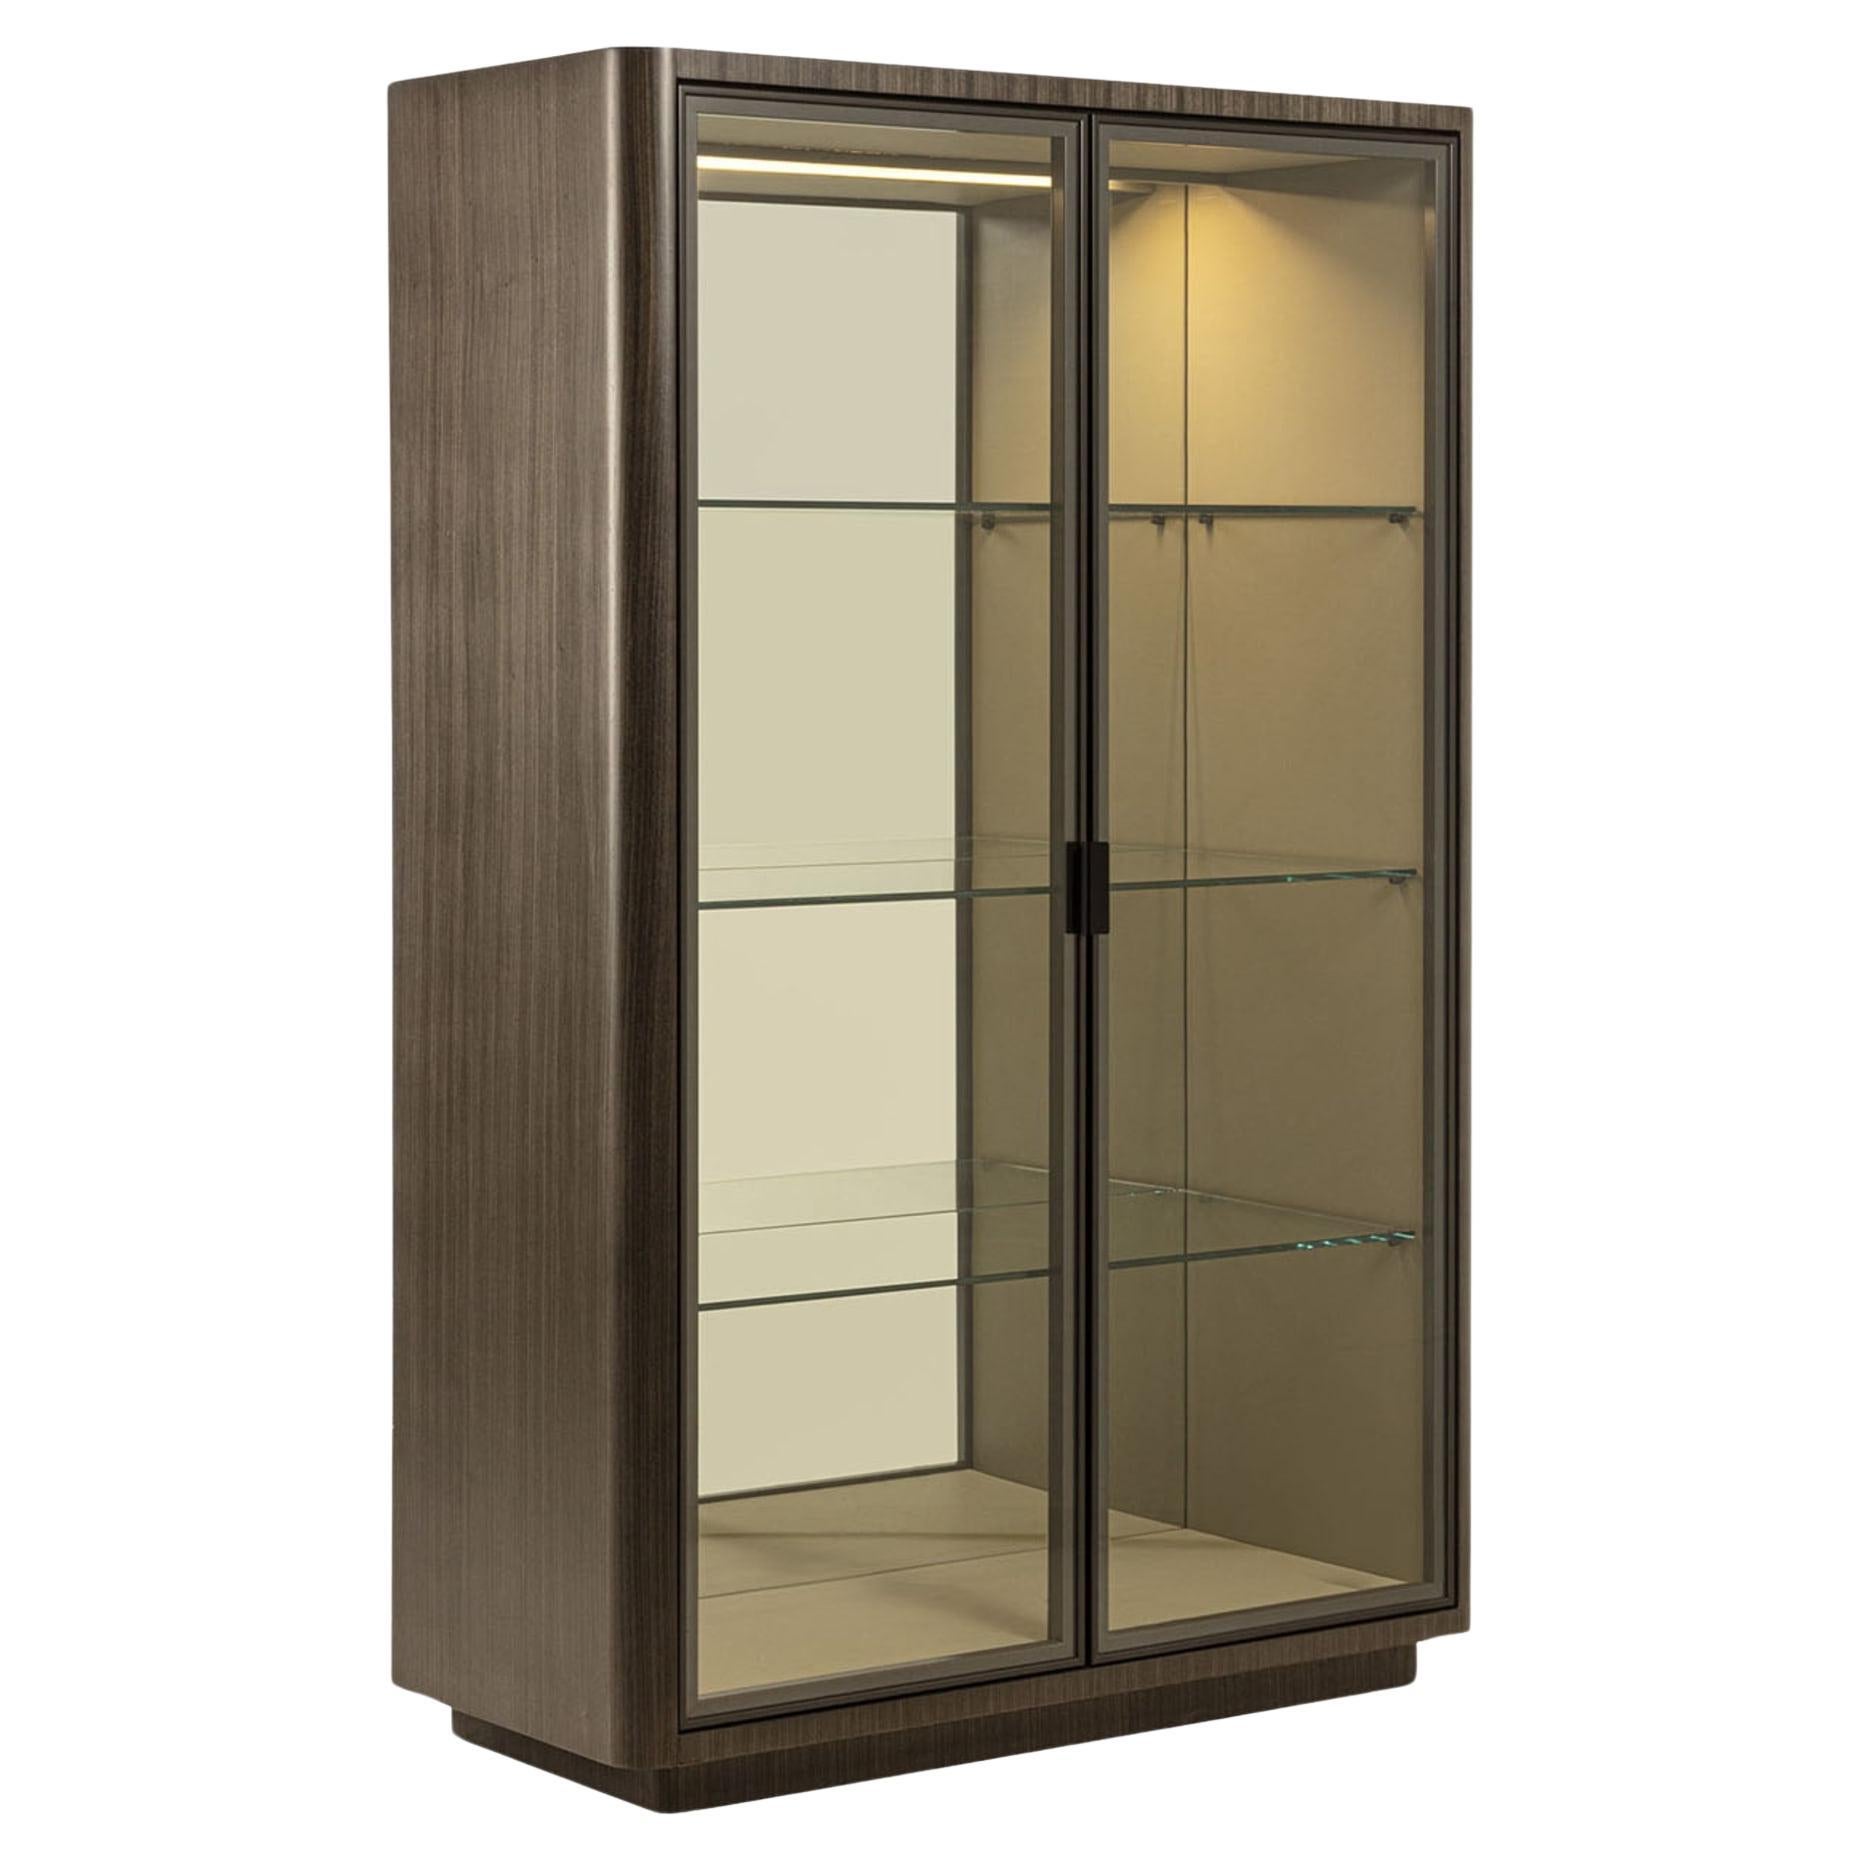 Dafne Glass Cabinet For Sale